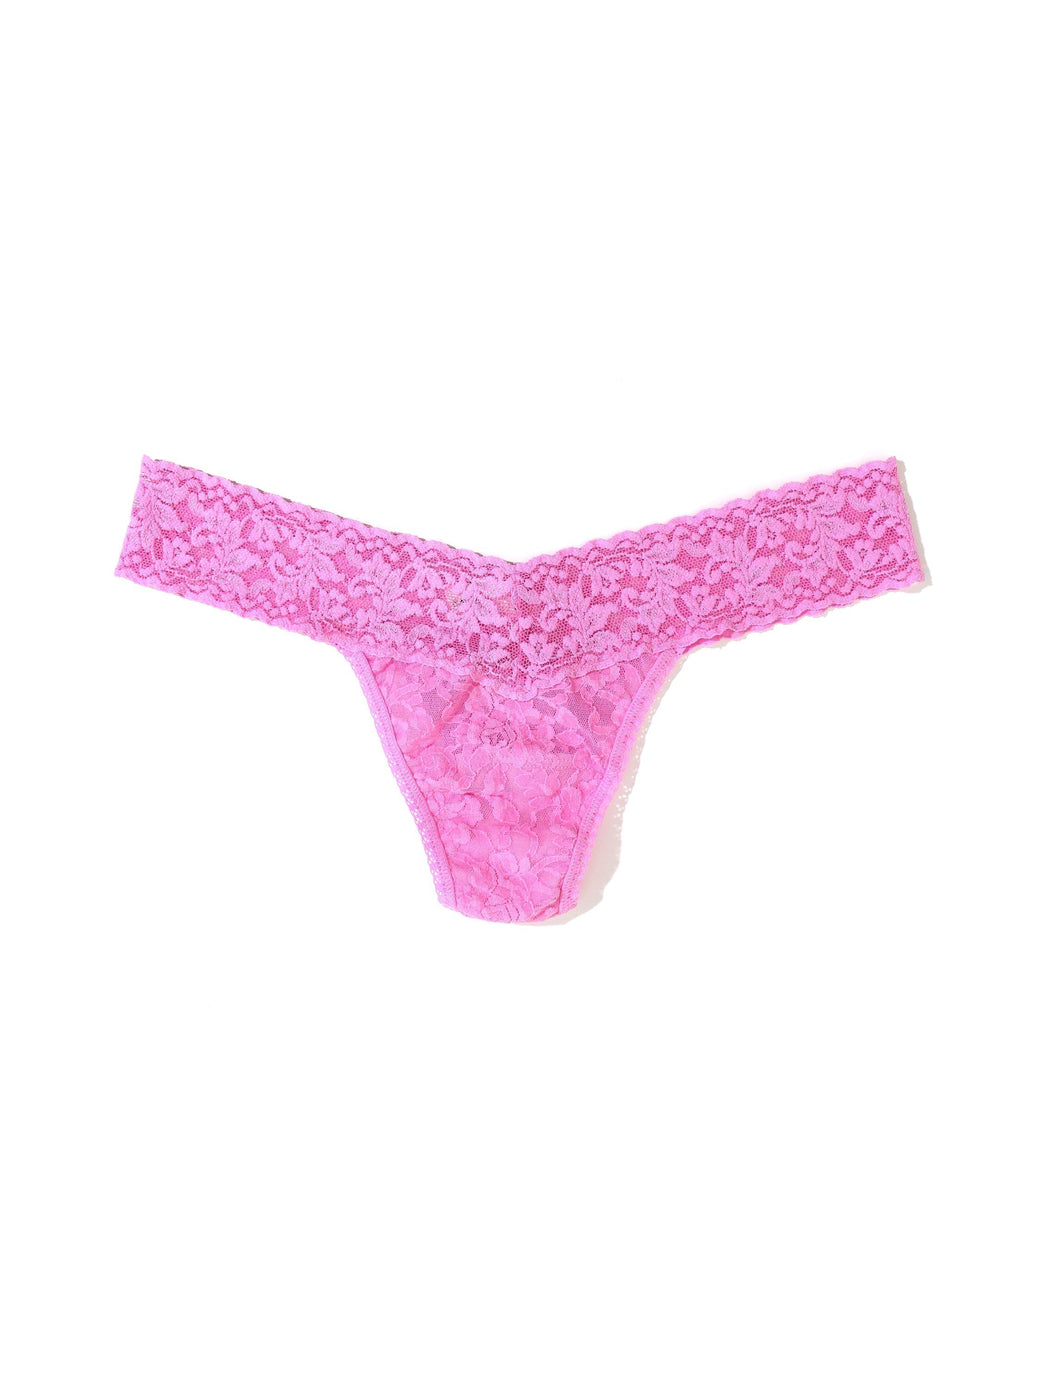 PUDER PINK Thong mid-rise bikini bottom - L - VivienVance